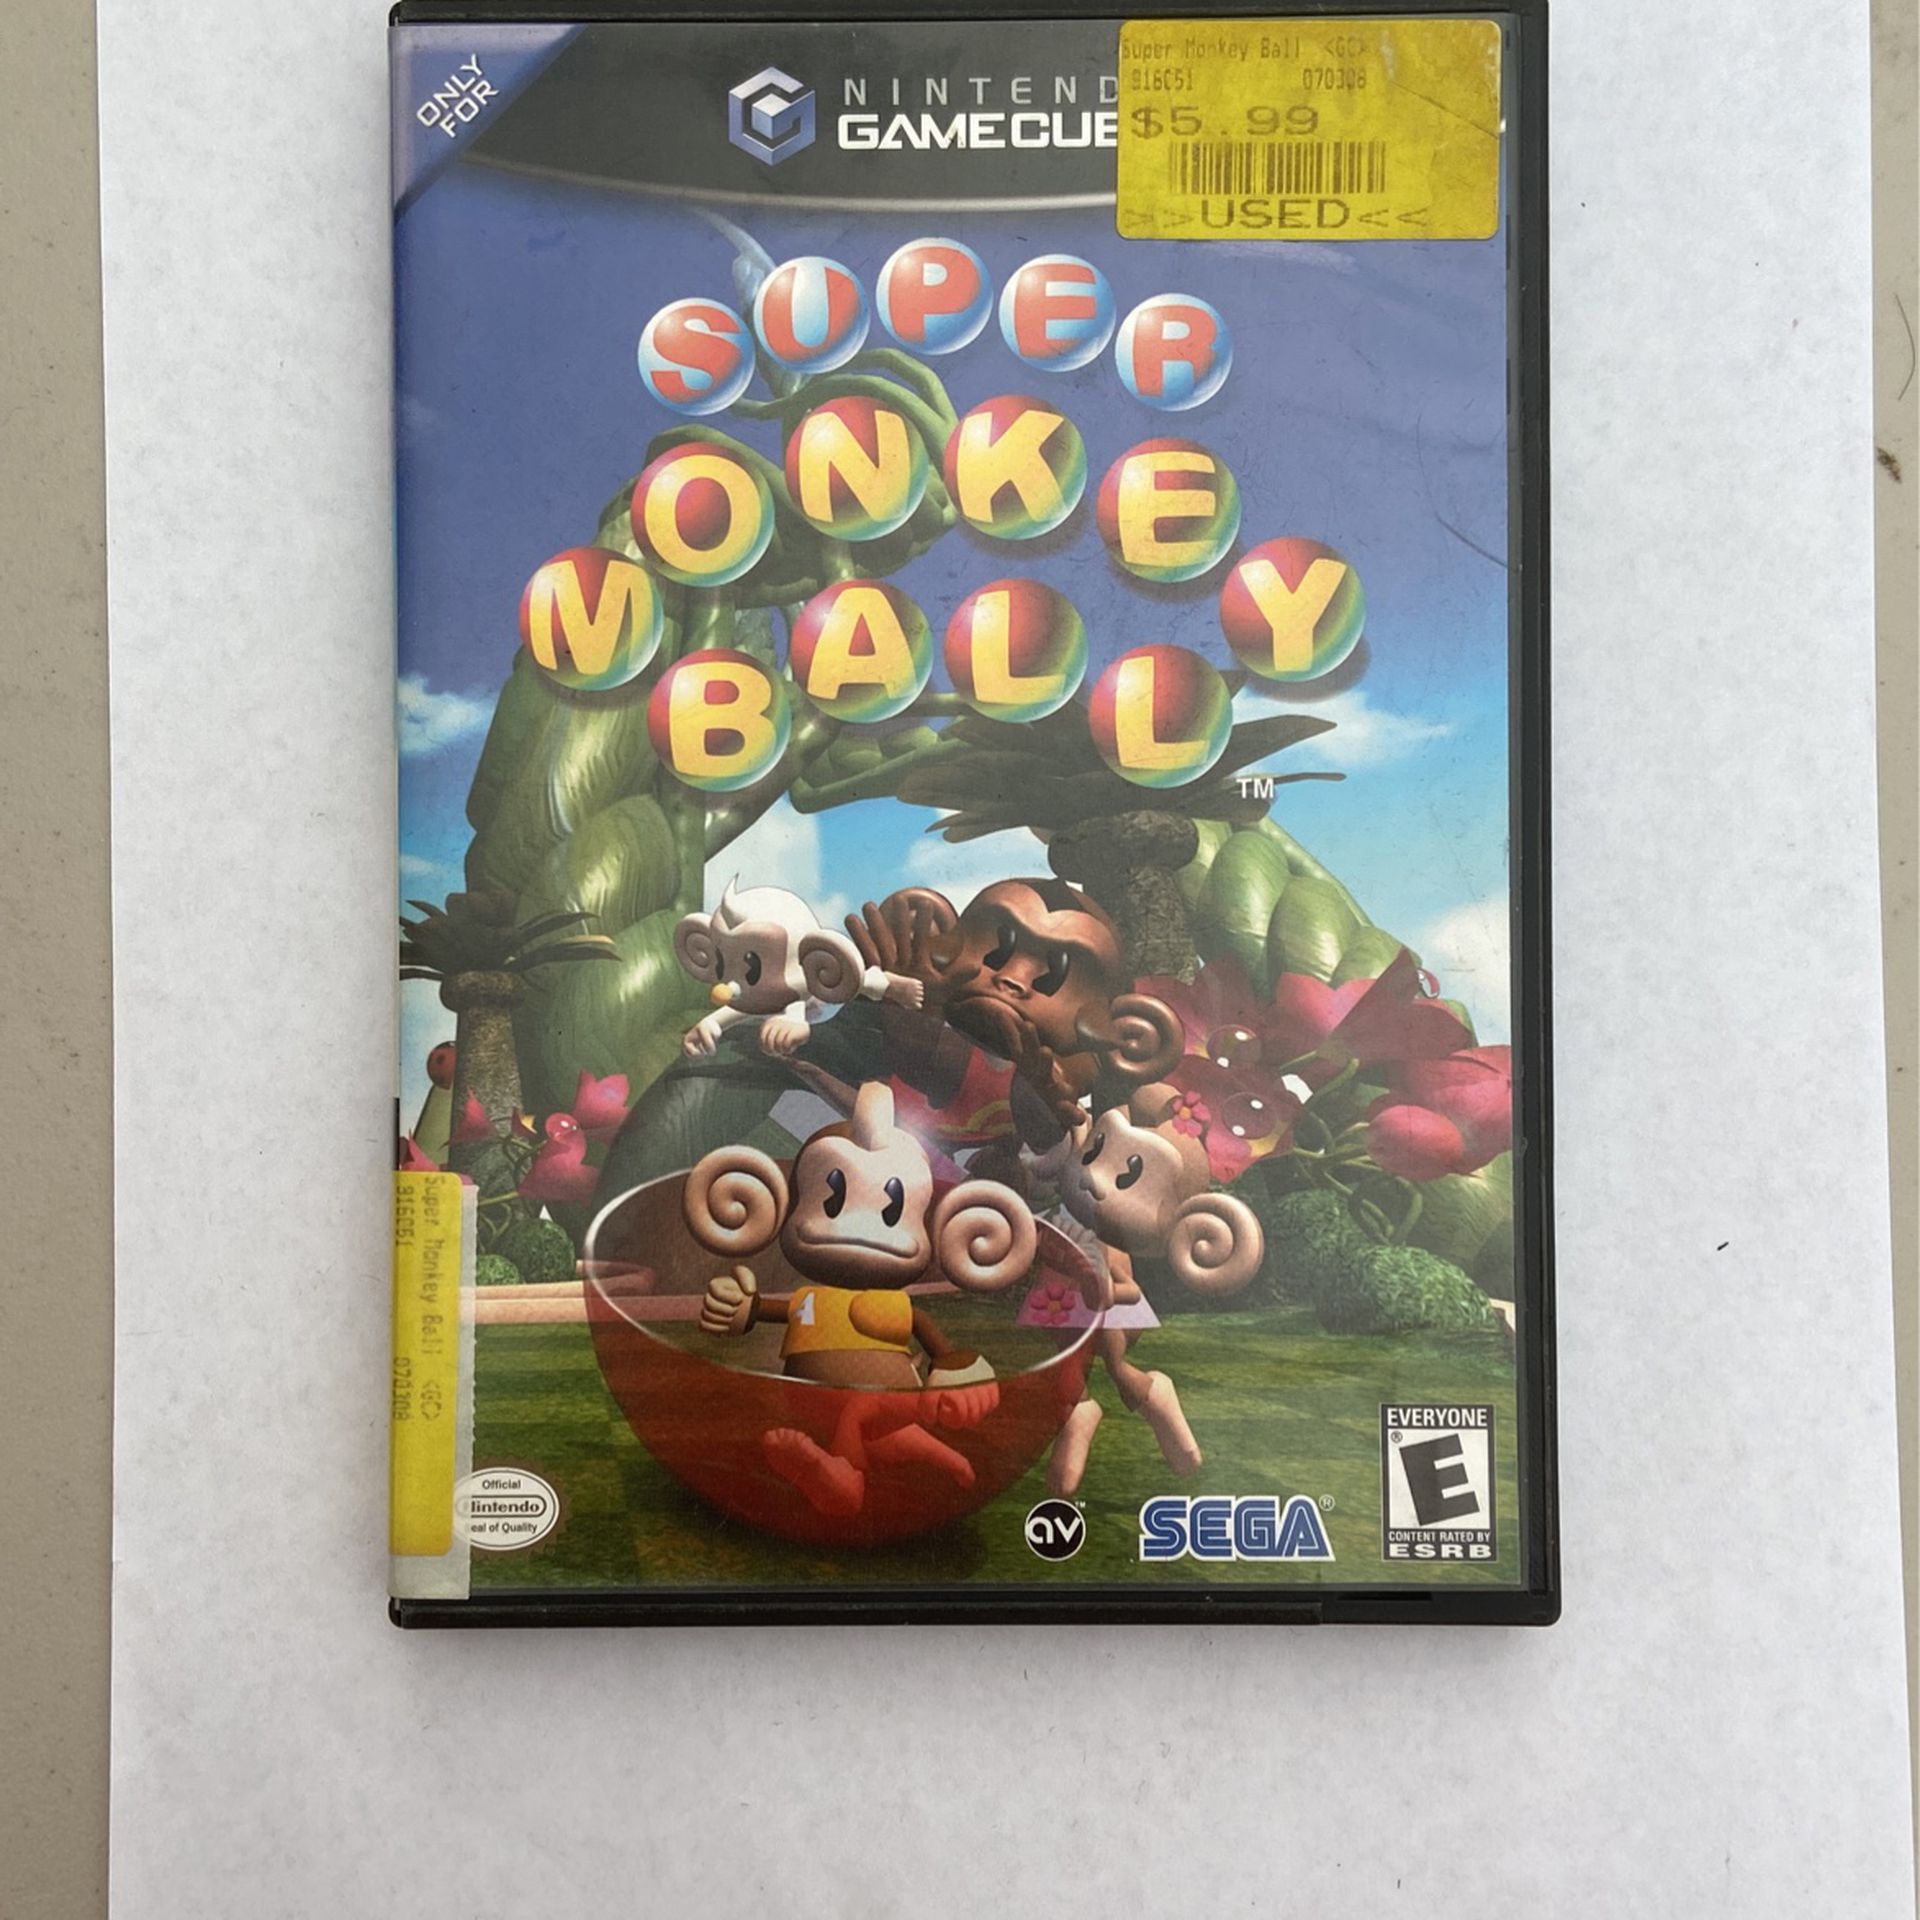 Nintendo GameCube Super Monkey Ball 